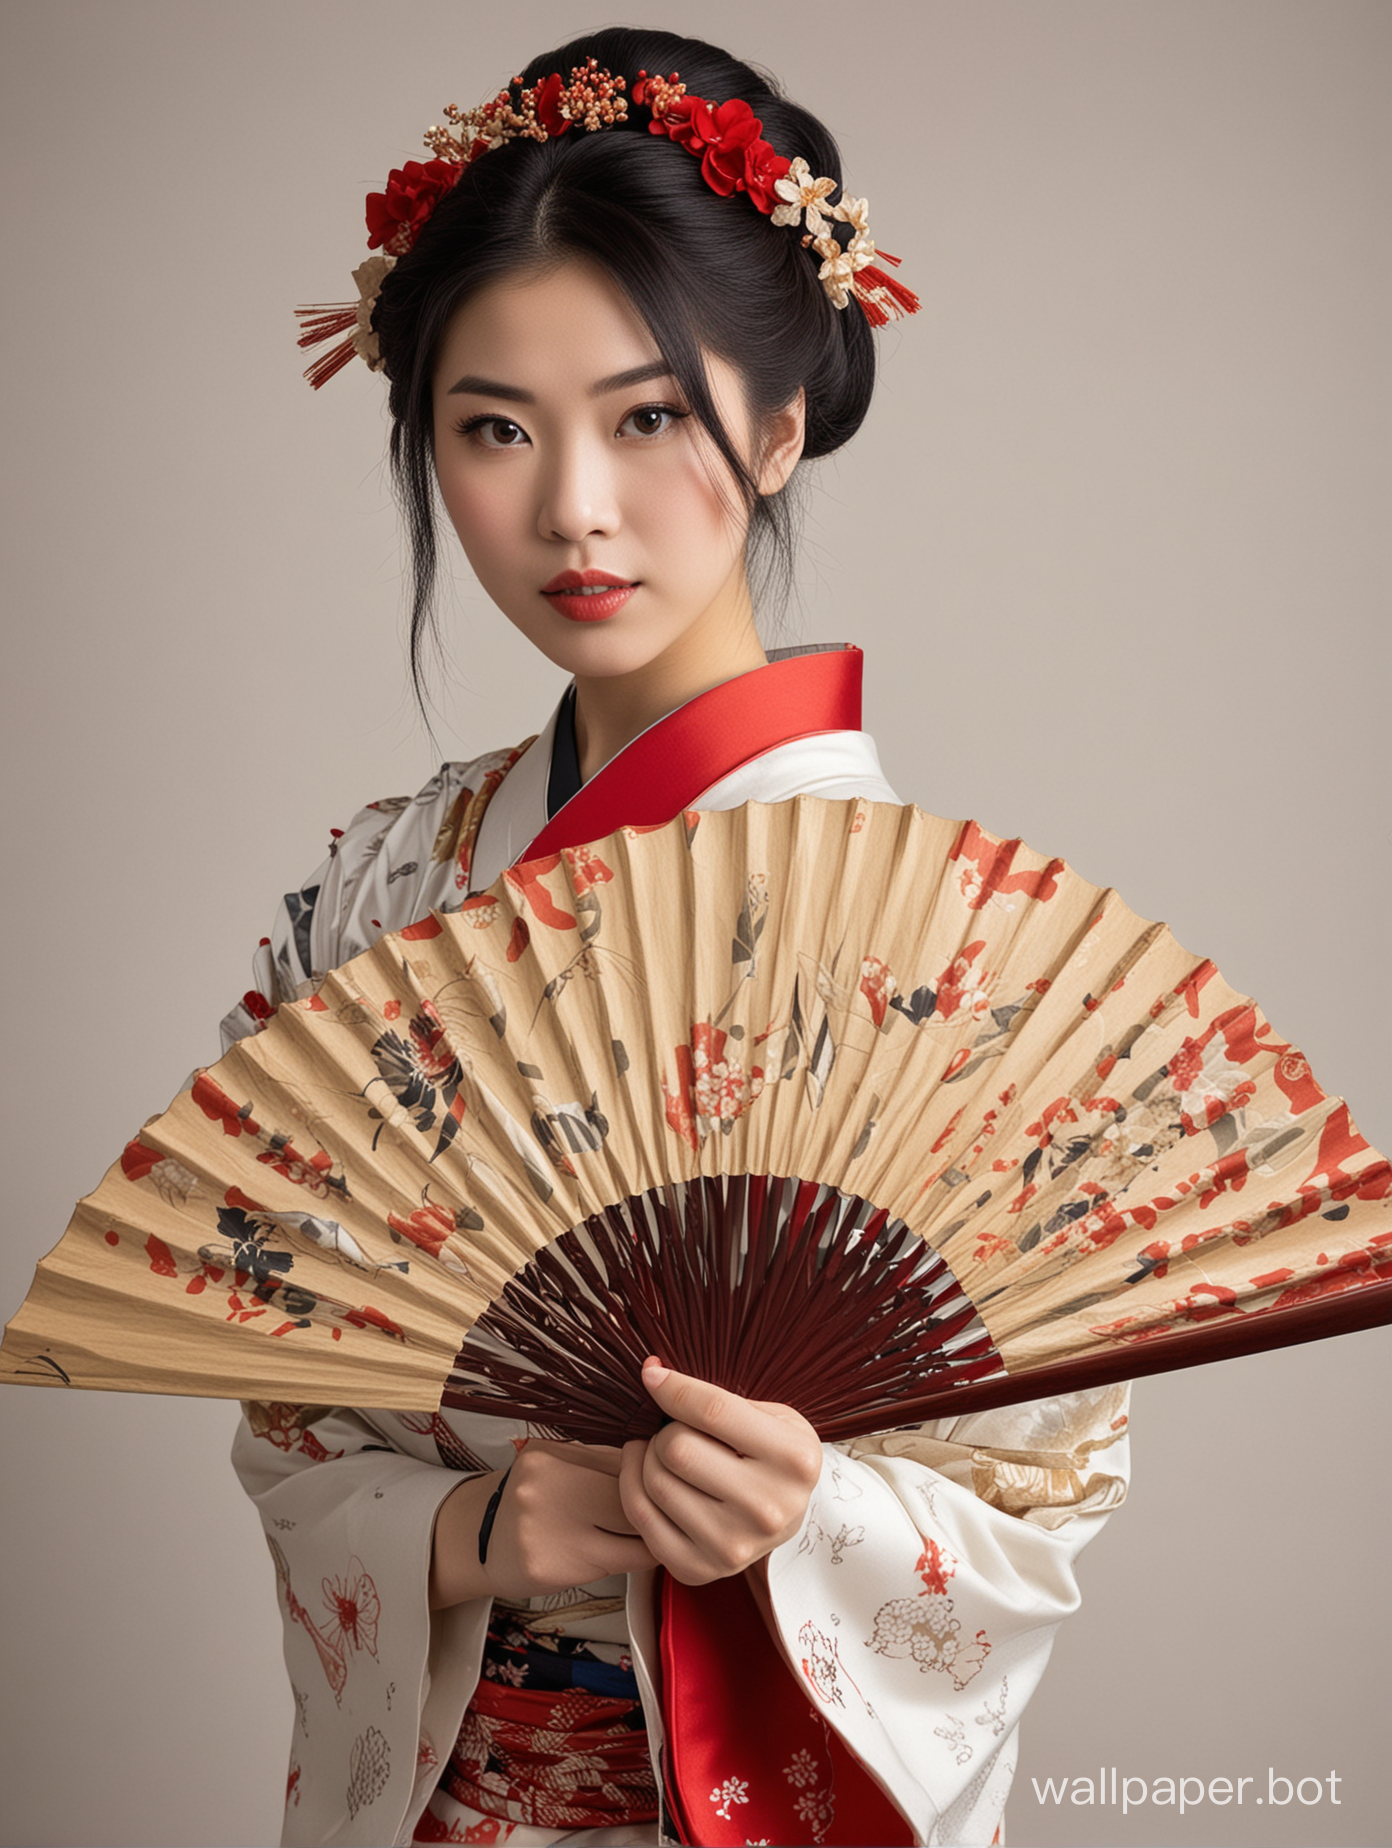 21 year old Asian female geisha wielding a japanese war fan
